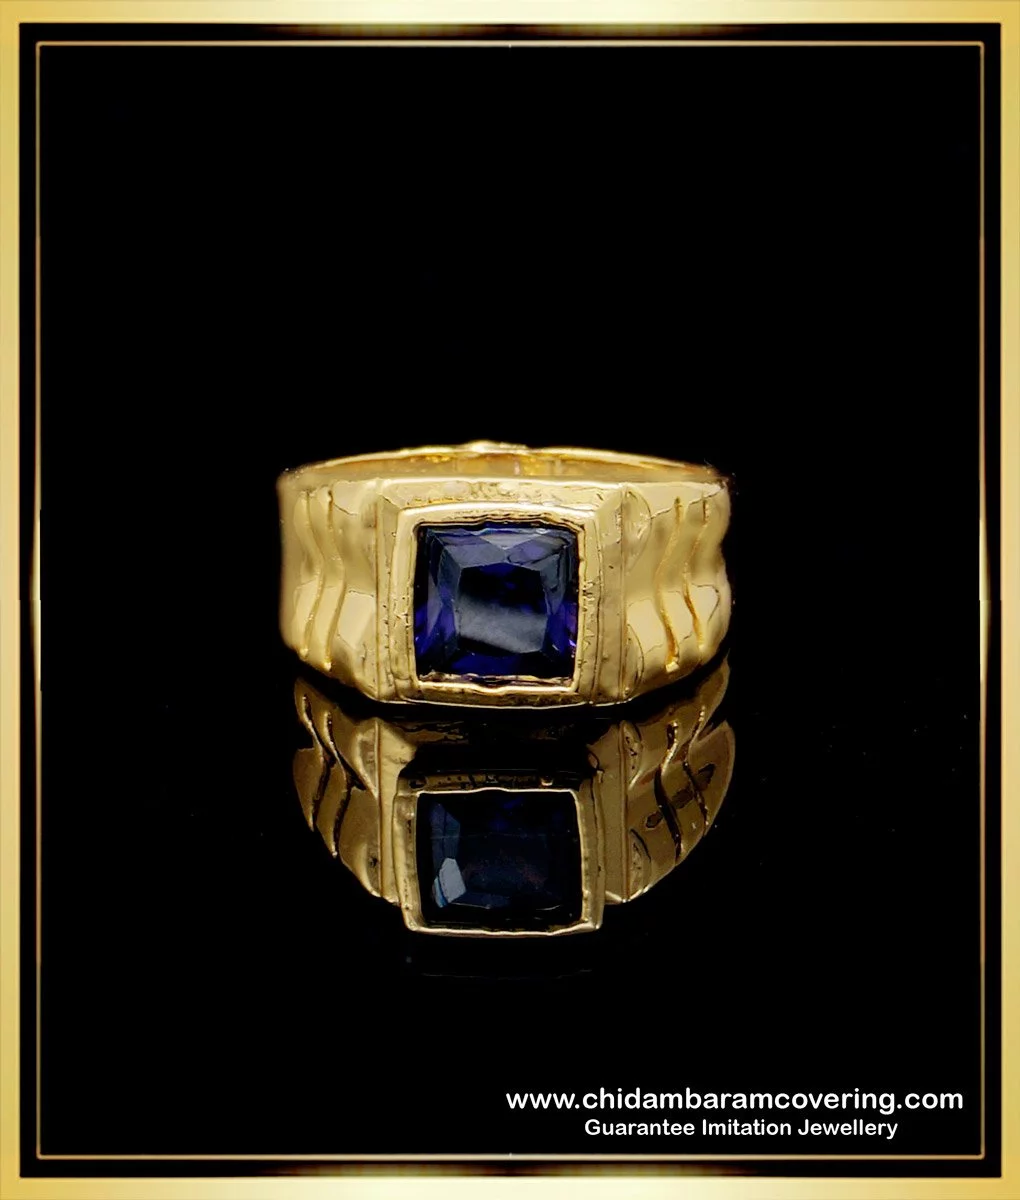 1.1 gram Gold Ring design/latest gold ring designs - YouTube